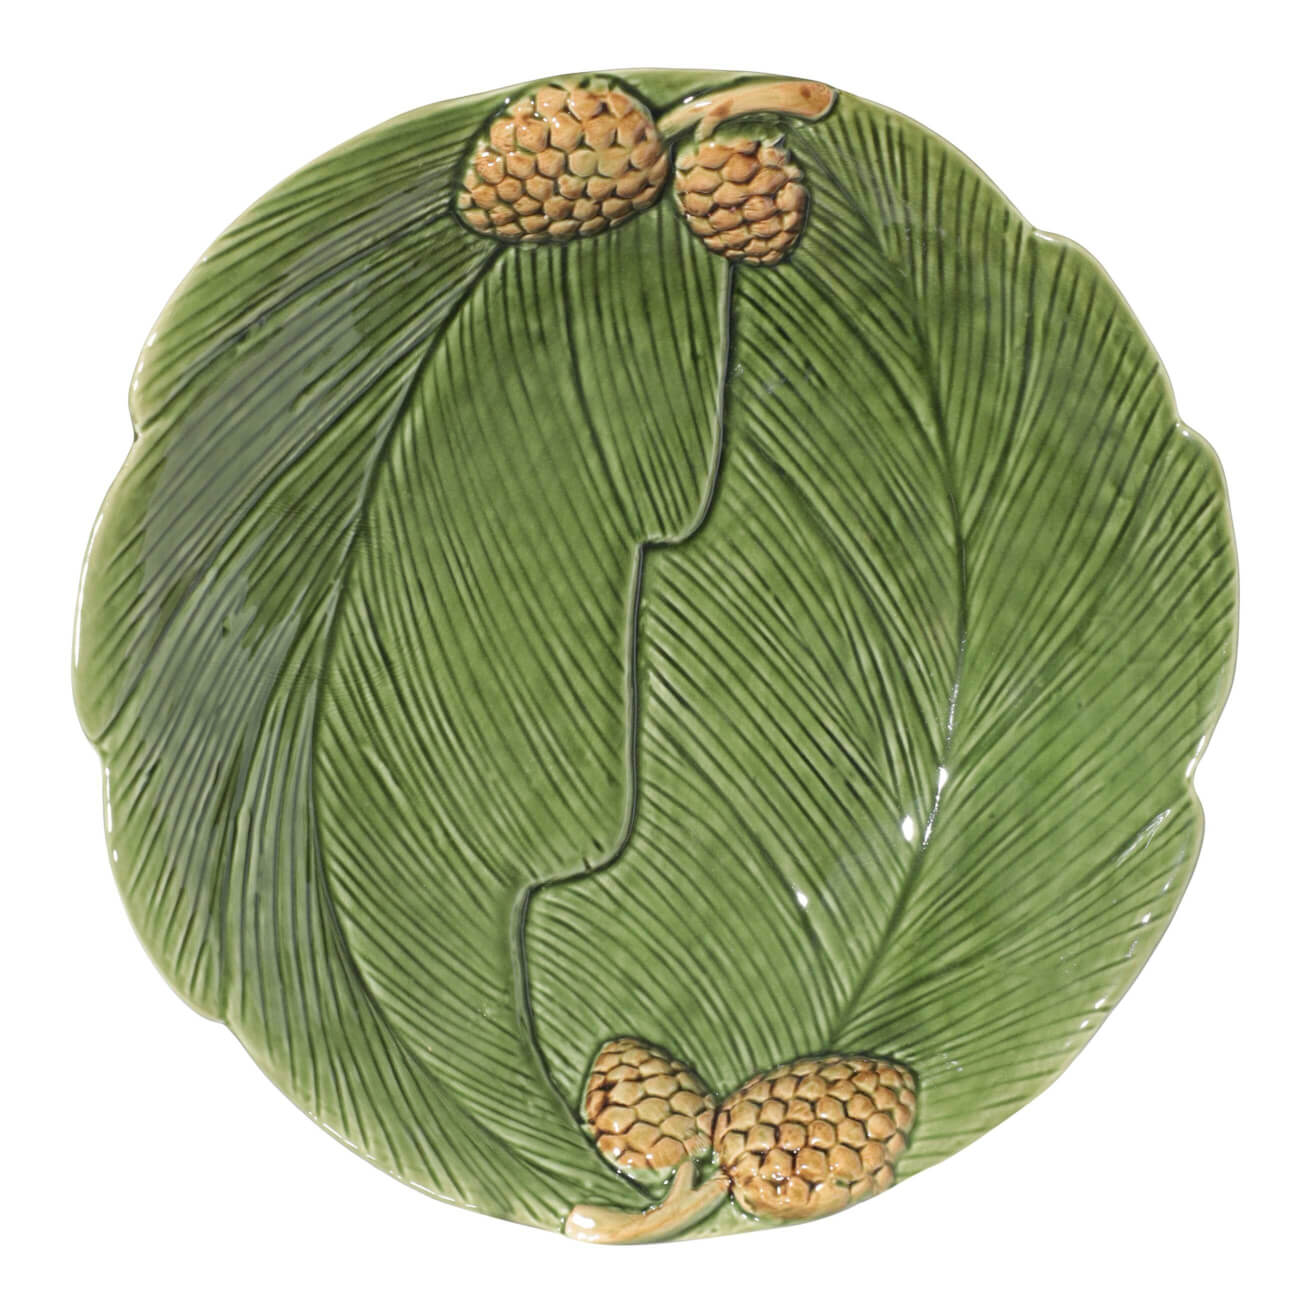 Блюдо, 26 см, керамика, круглое, зеленое, Шишки на листе, Fir cone блюдо глубокое 36 см керамика белое утки harmony